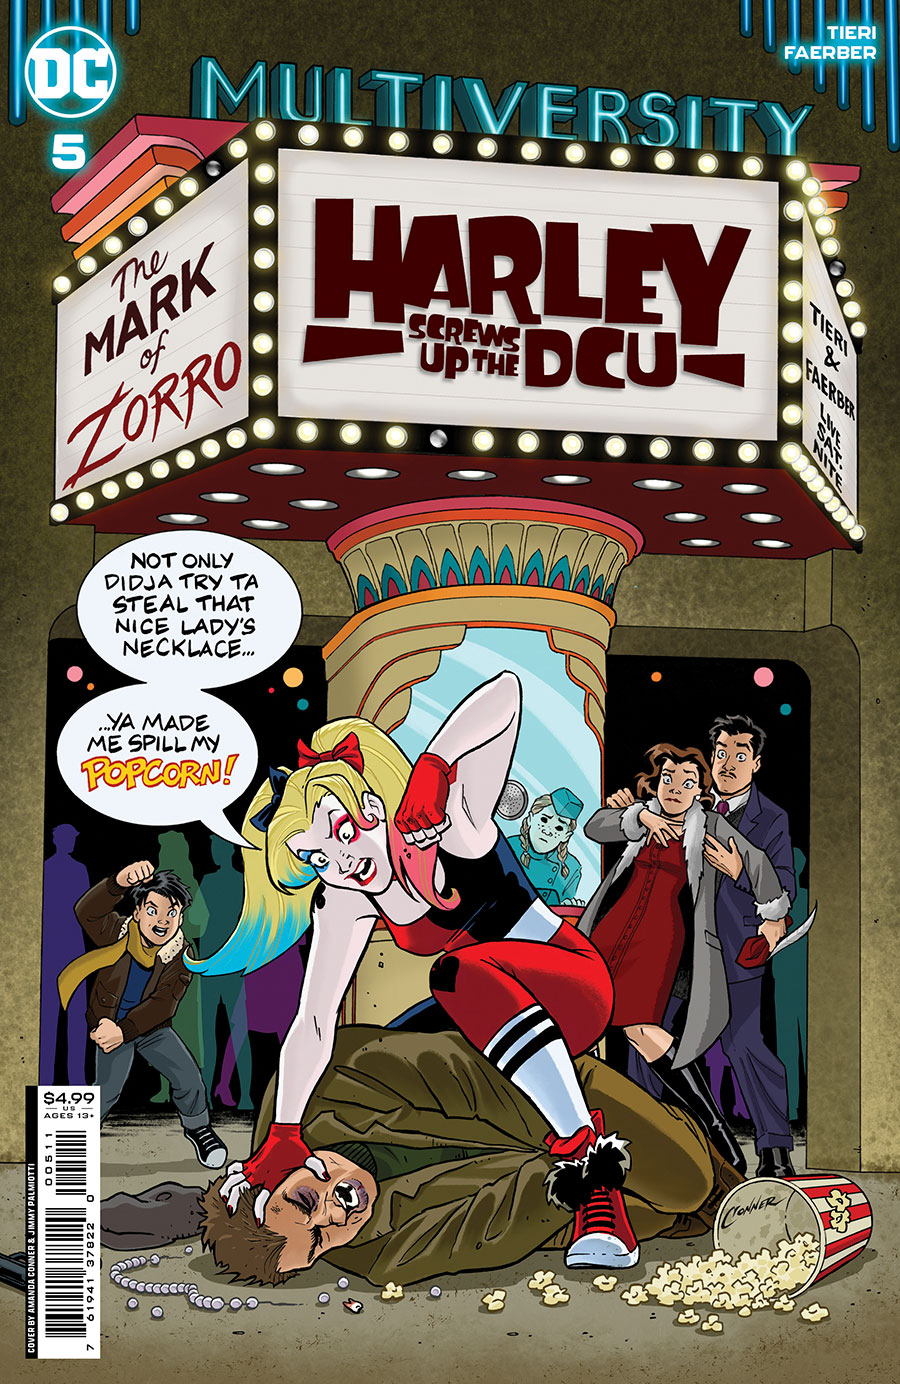 Multiversity Harley Screws Up The DCU #5 Cover A Regular Amanda Conner Cover